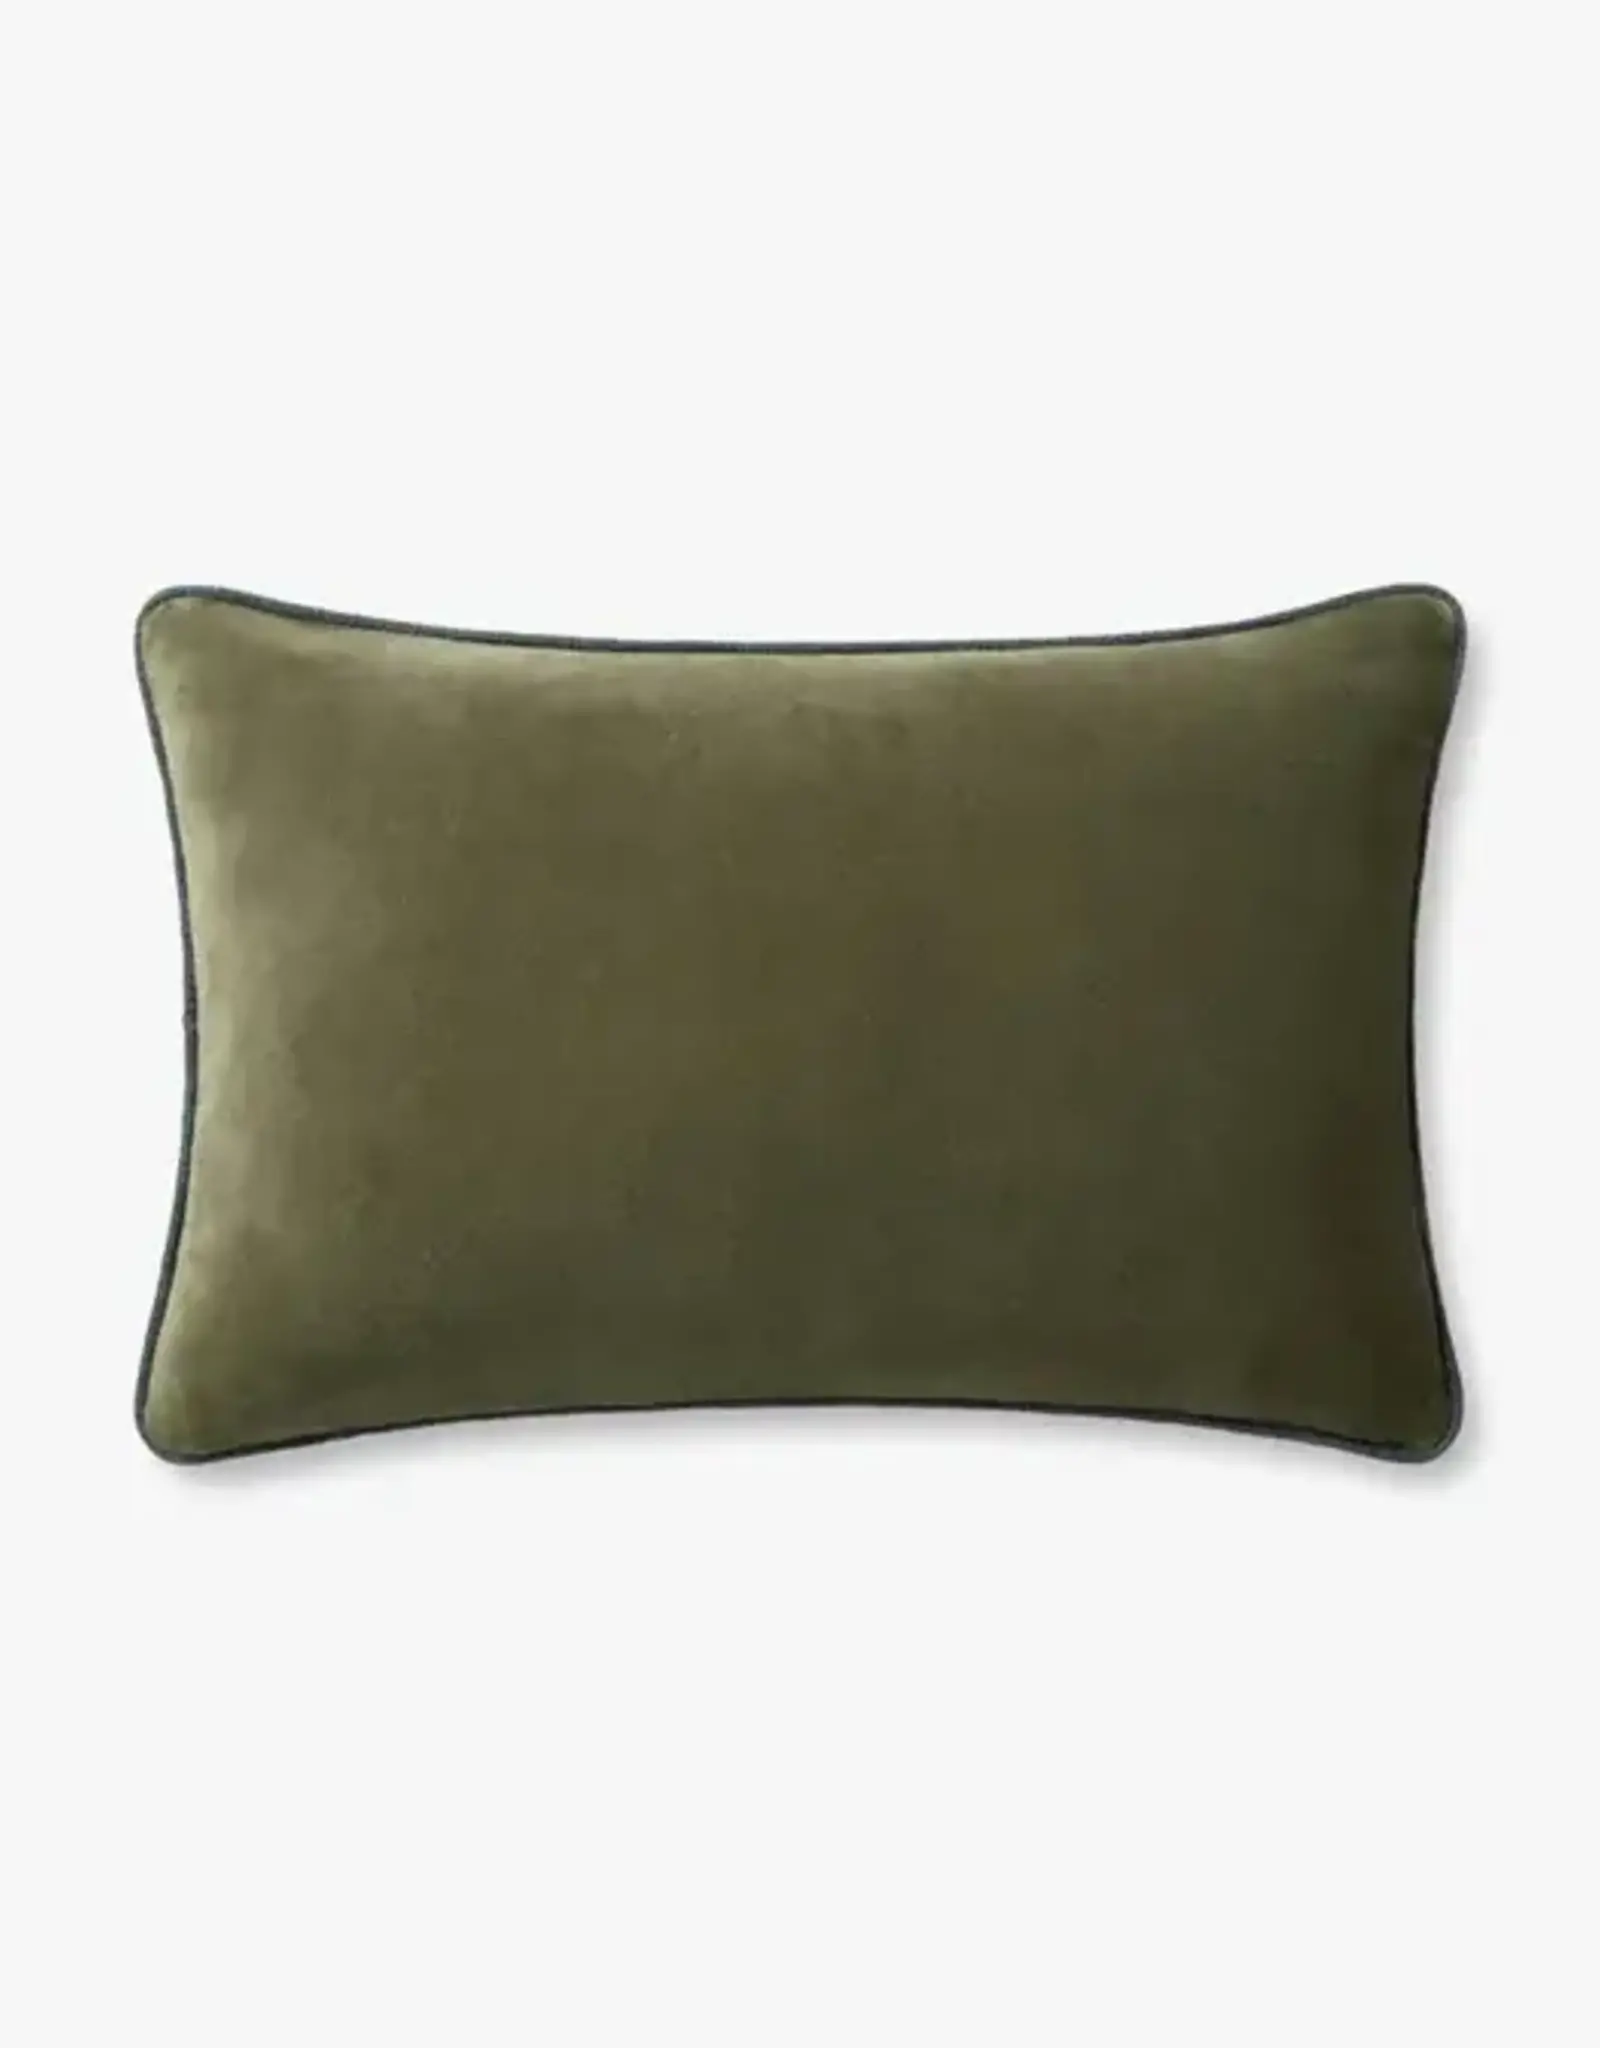 Chris Loves Julia × Loloi Green Pillow, 16x26